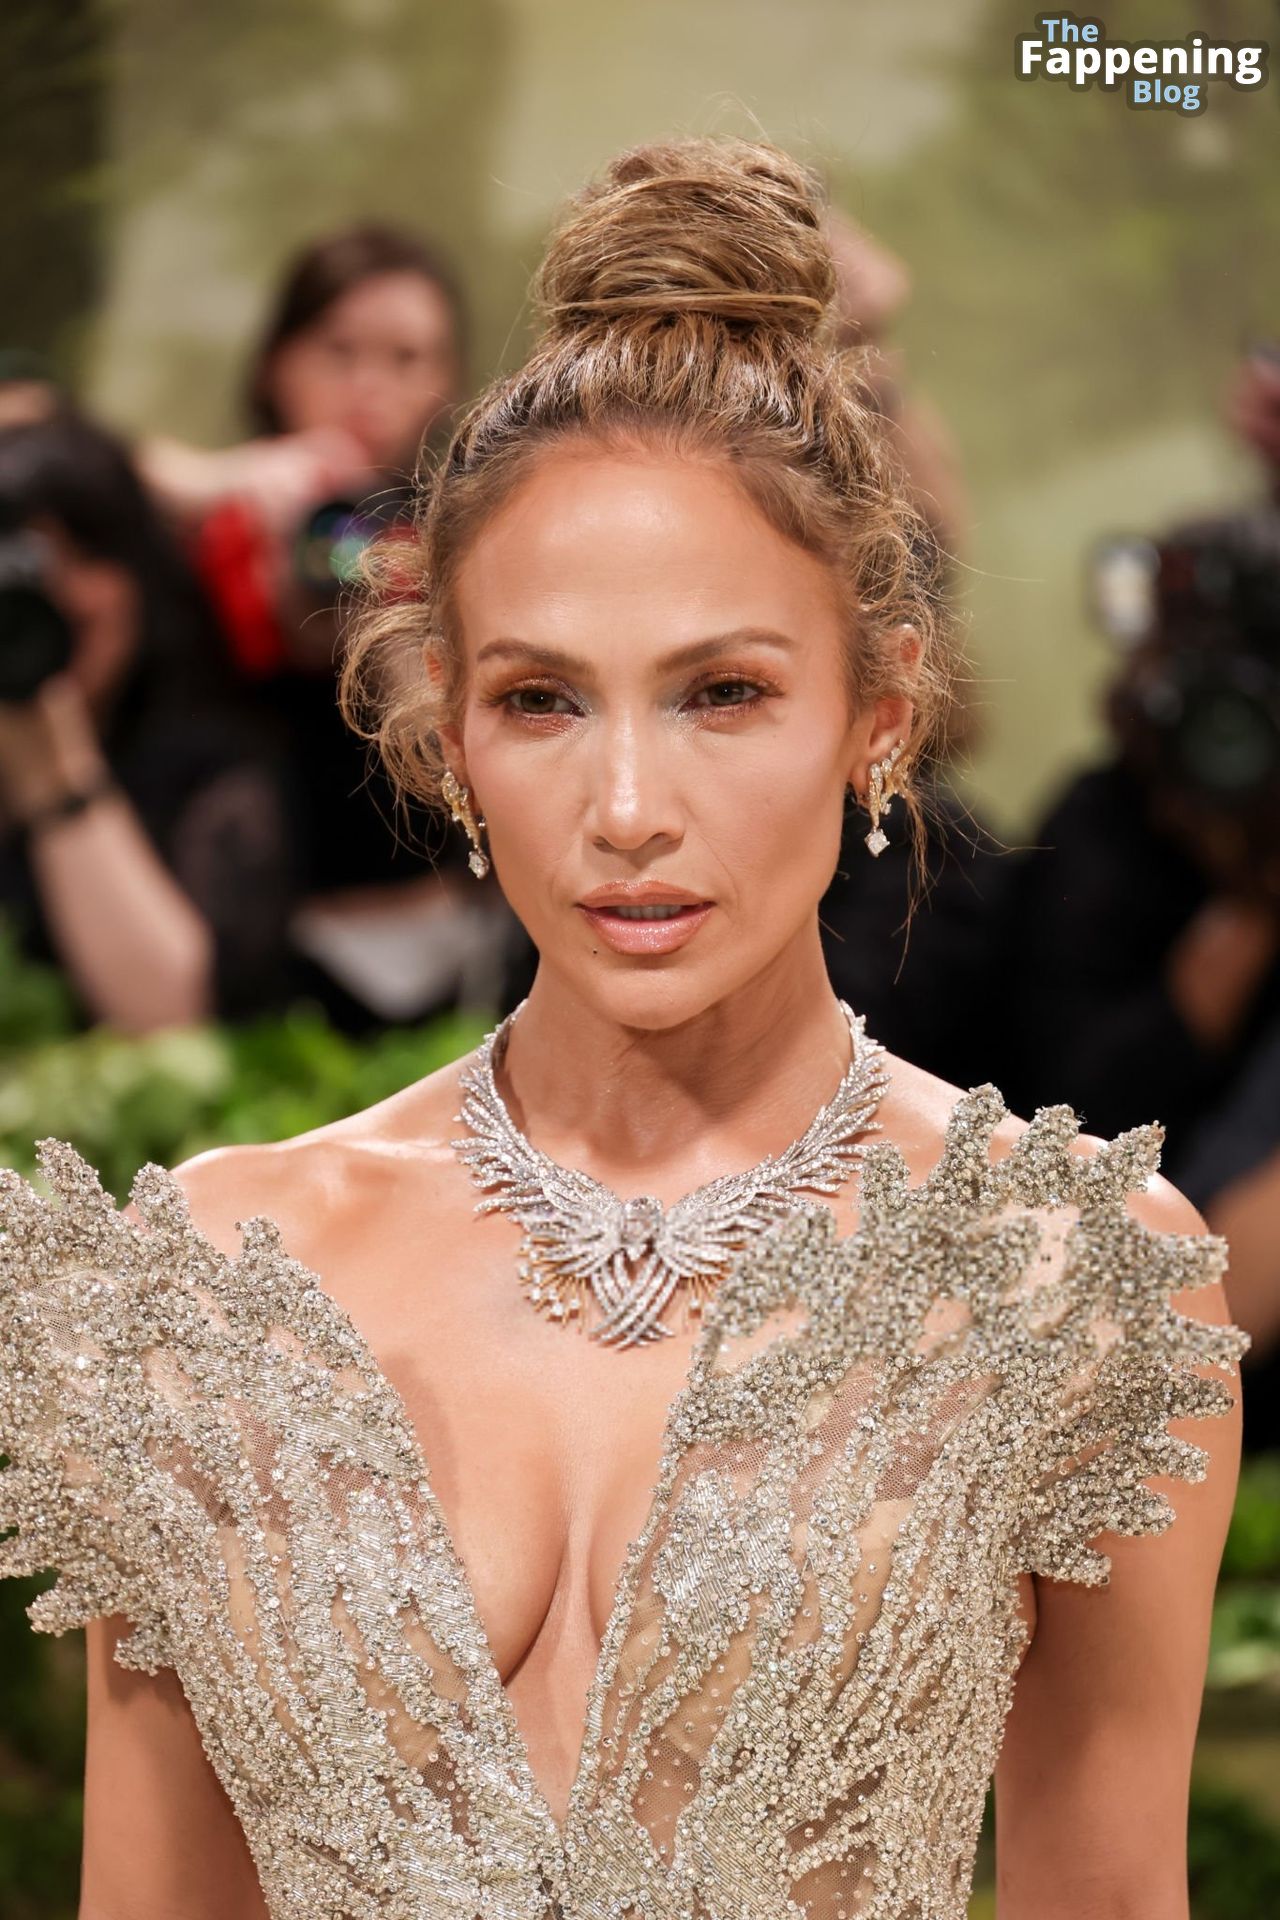 Jennifer-Lopez-Hot-42-The-Fappening-Blog.jpg